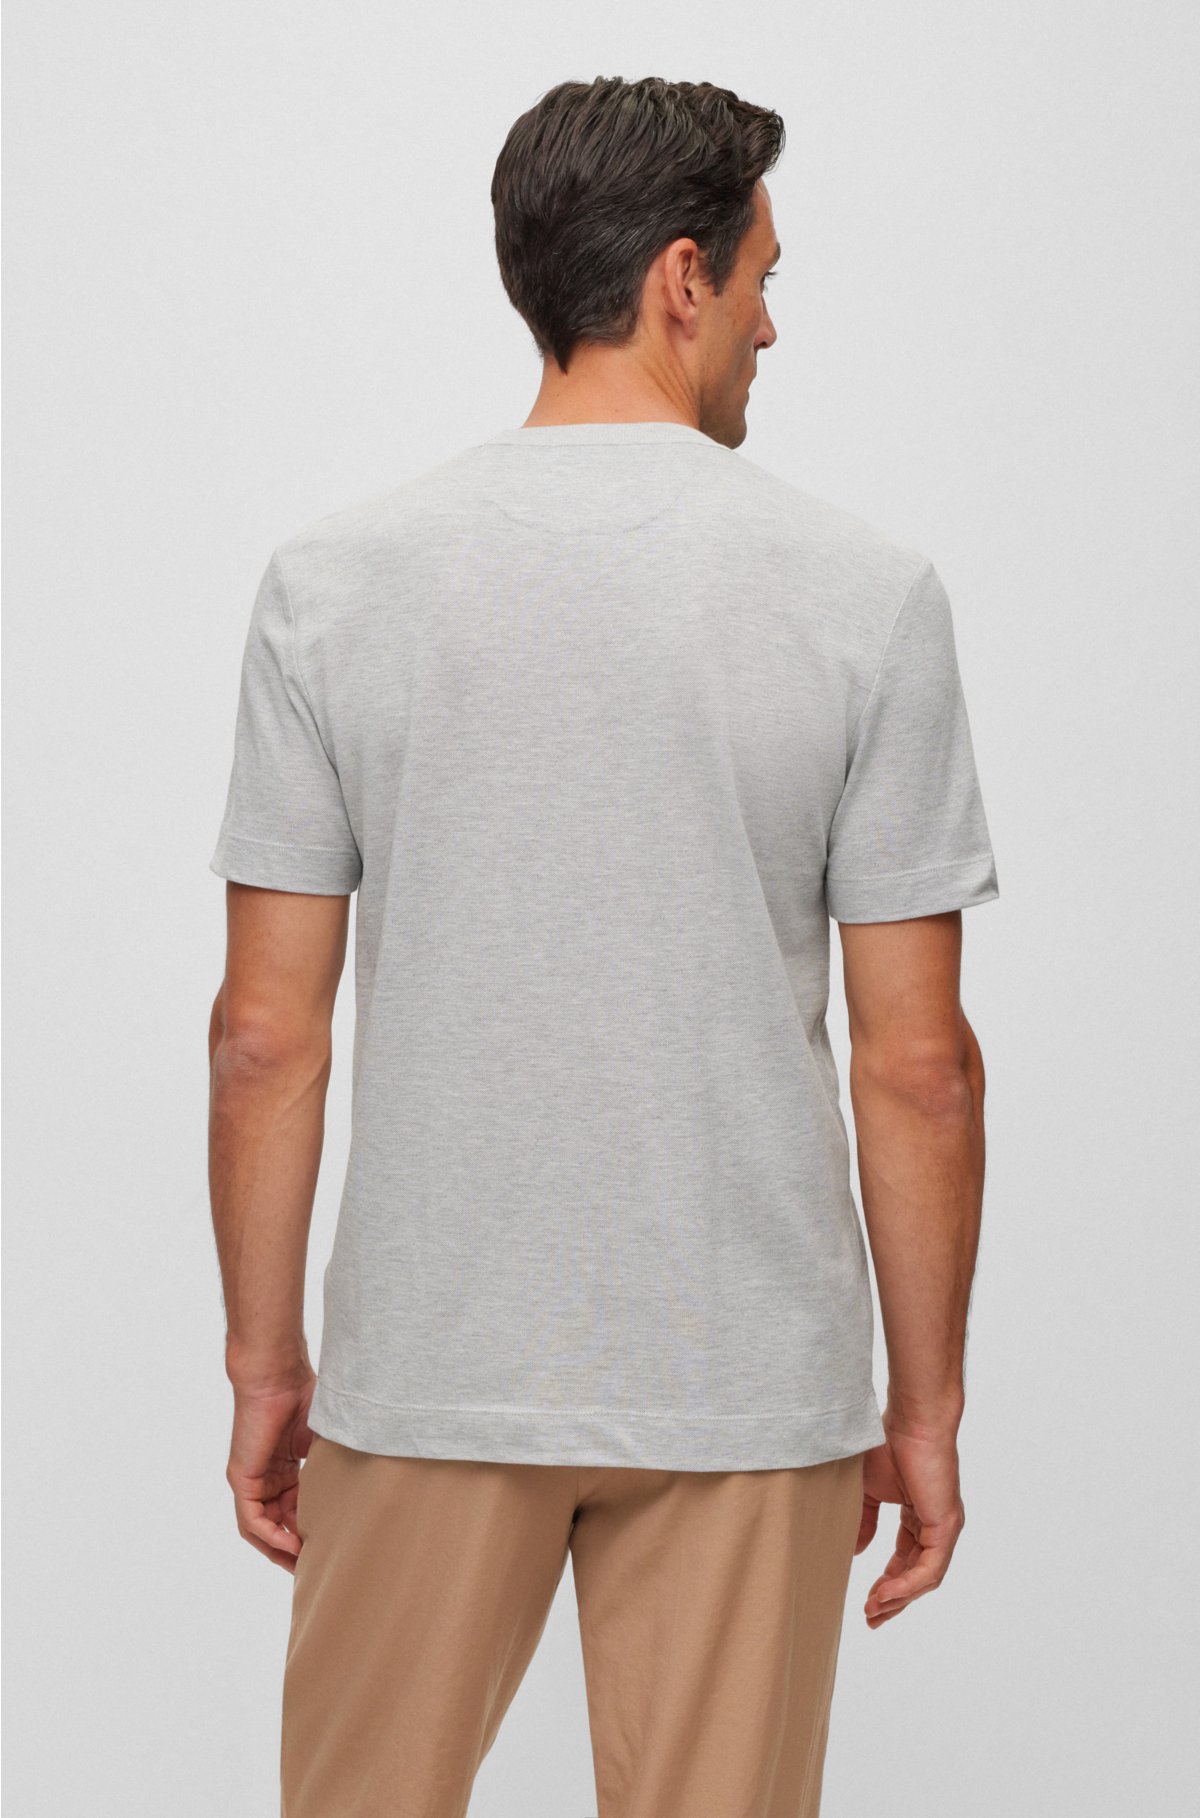 BOSS T-shirt - with Cotton-cashmere mercerized finish